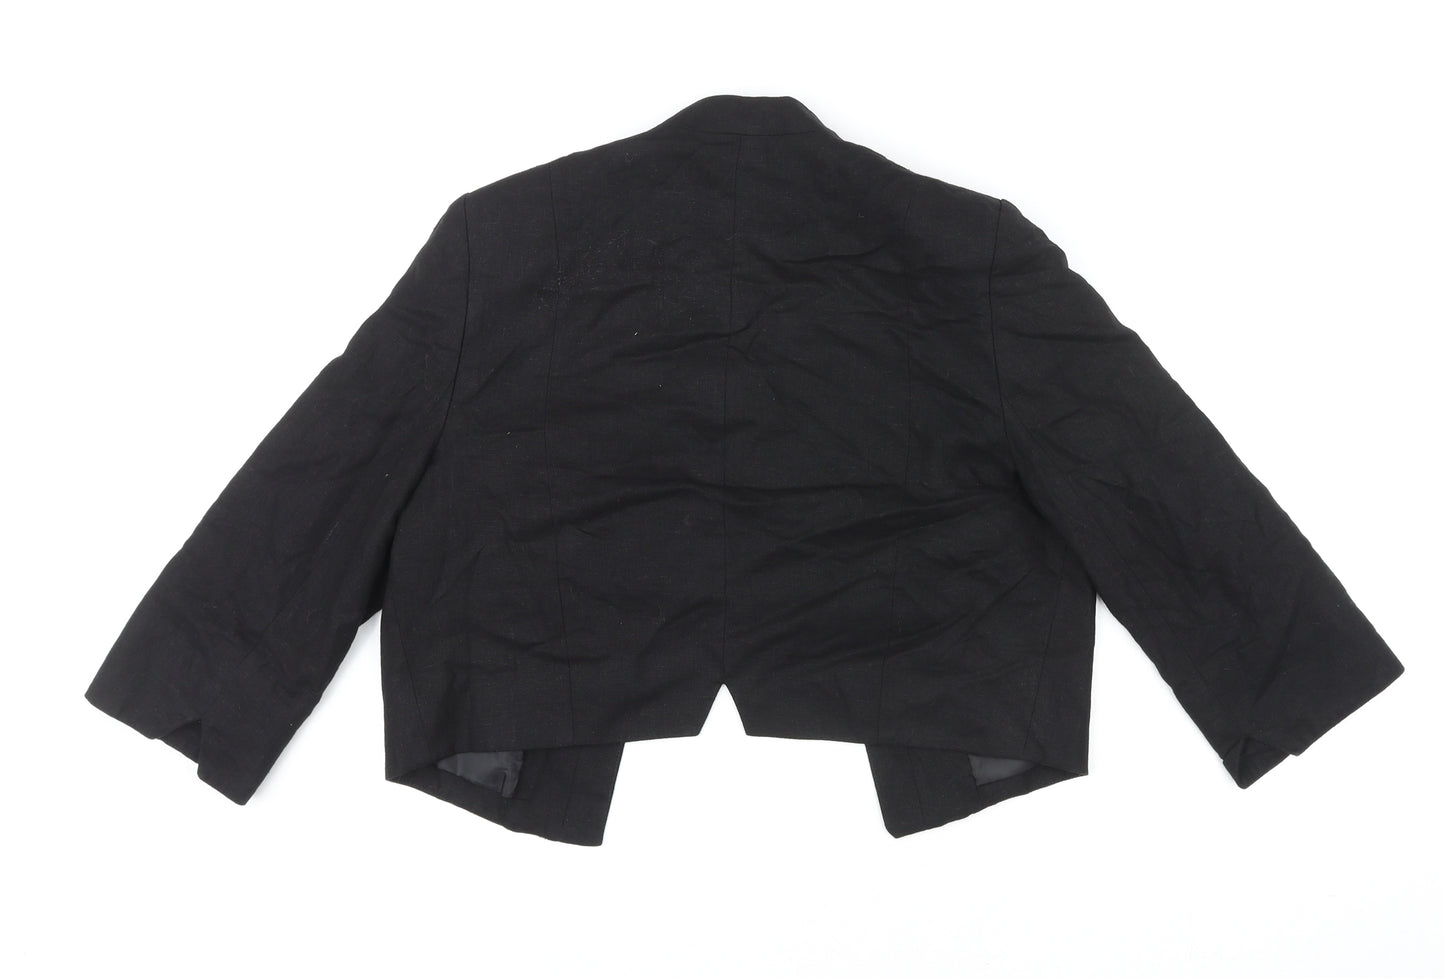 Debenhams Womens Black Jacket Blazer Size 14